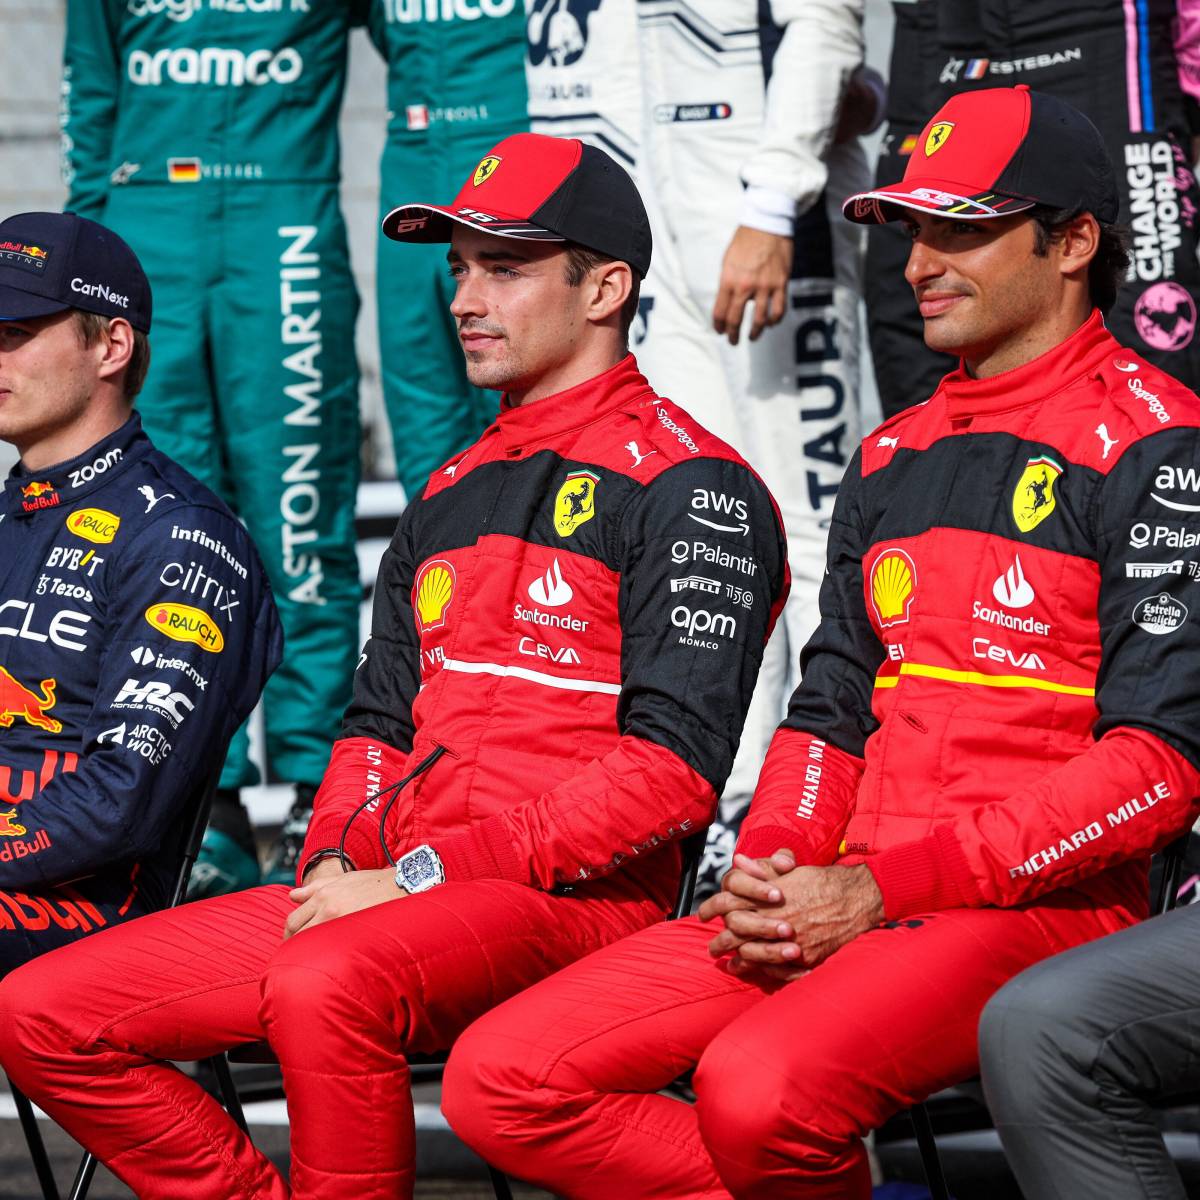 Formel 1: Ferrari macht es offiziell! Fans schauen genau hin